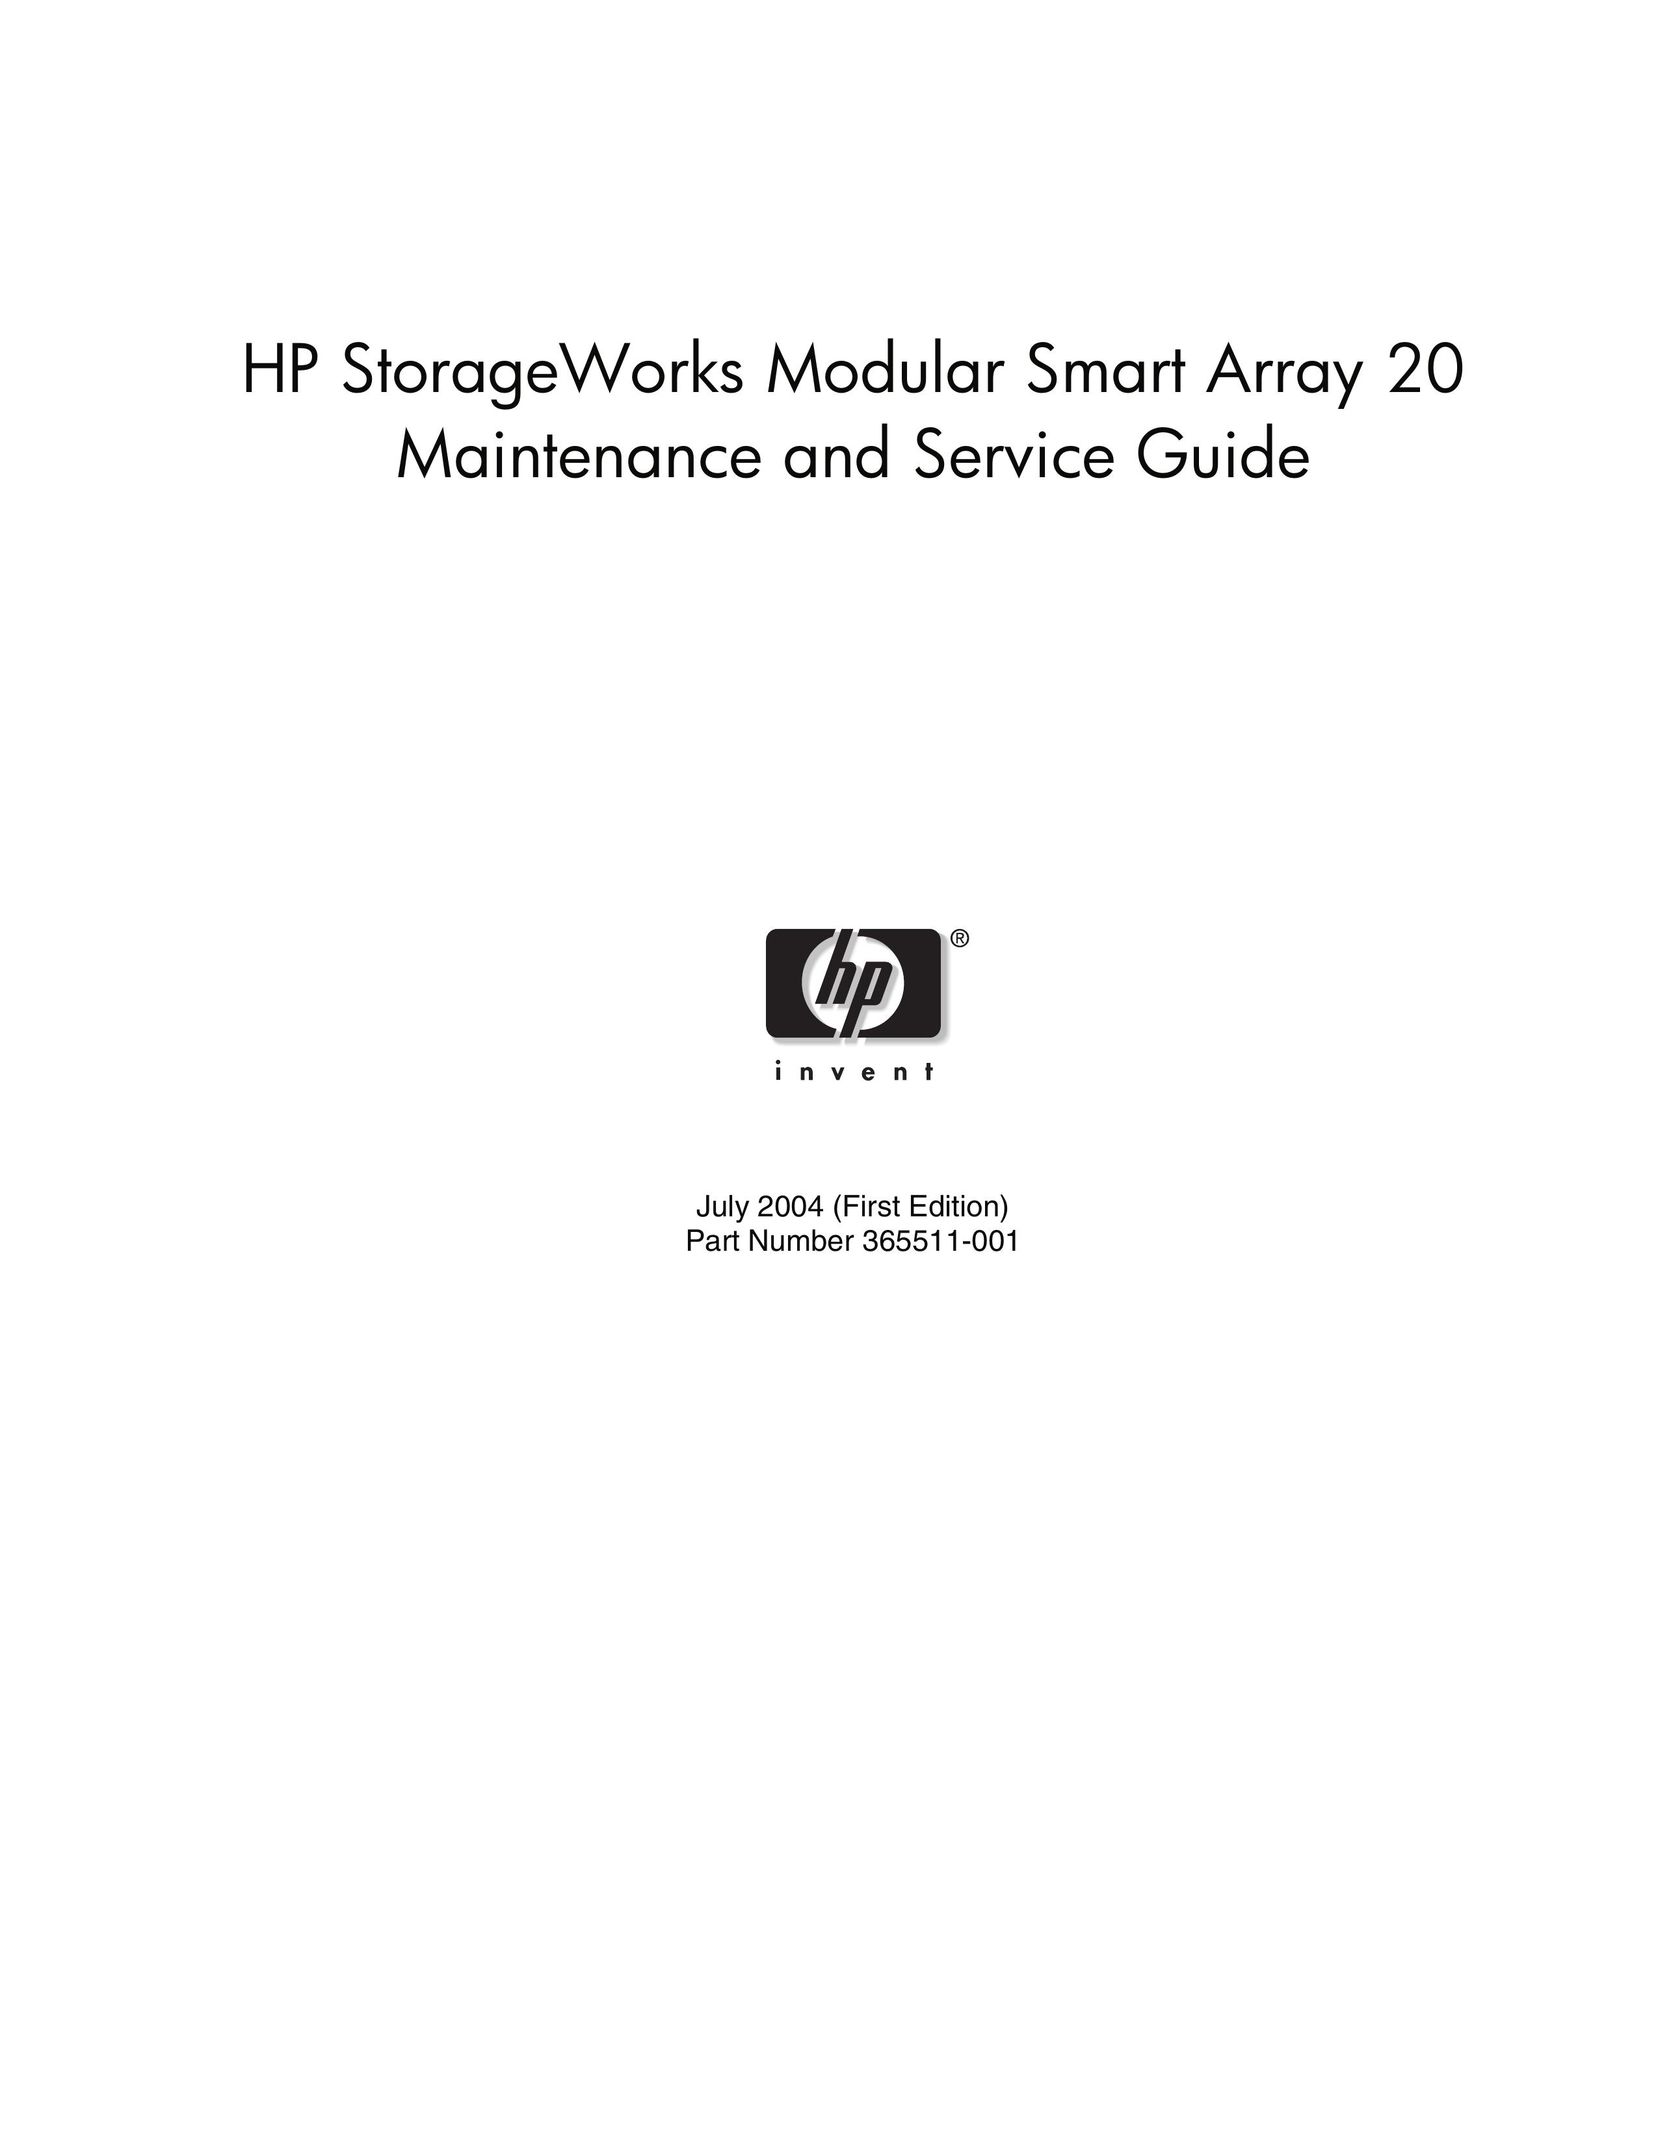 HP (Hewlett-Packard) hp storage works modular smart array 20 Cell Phone User Manual